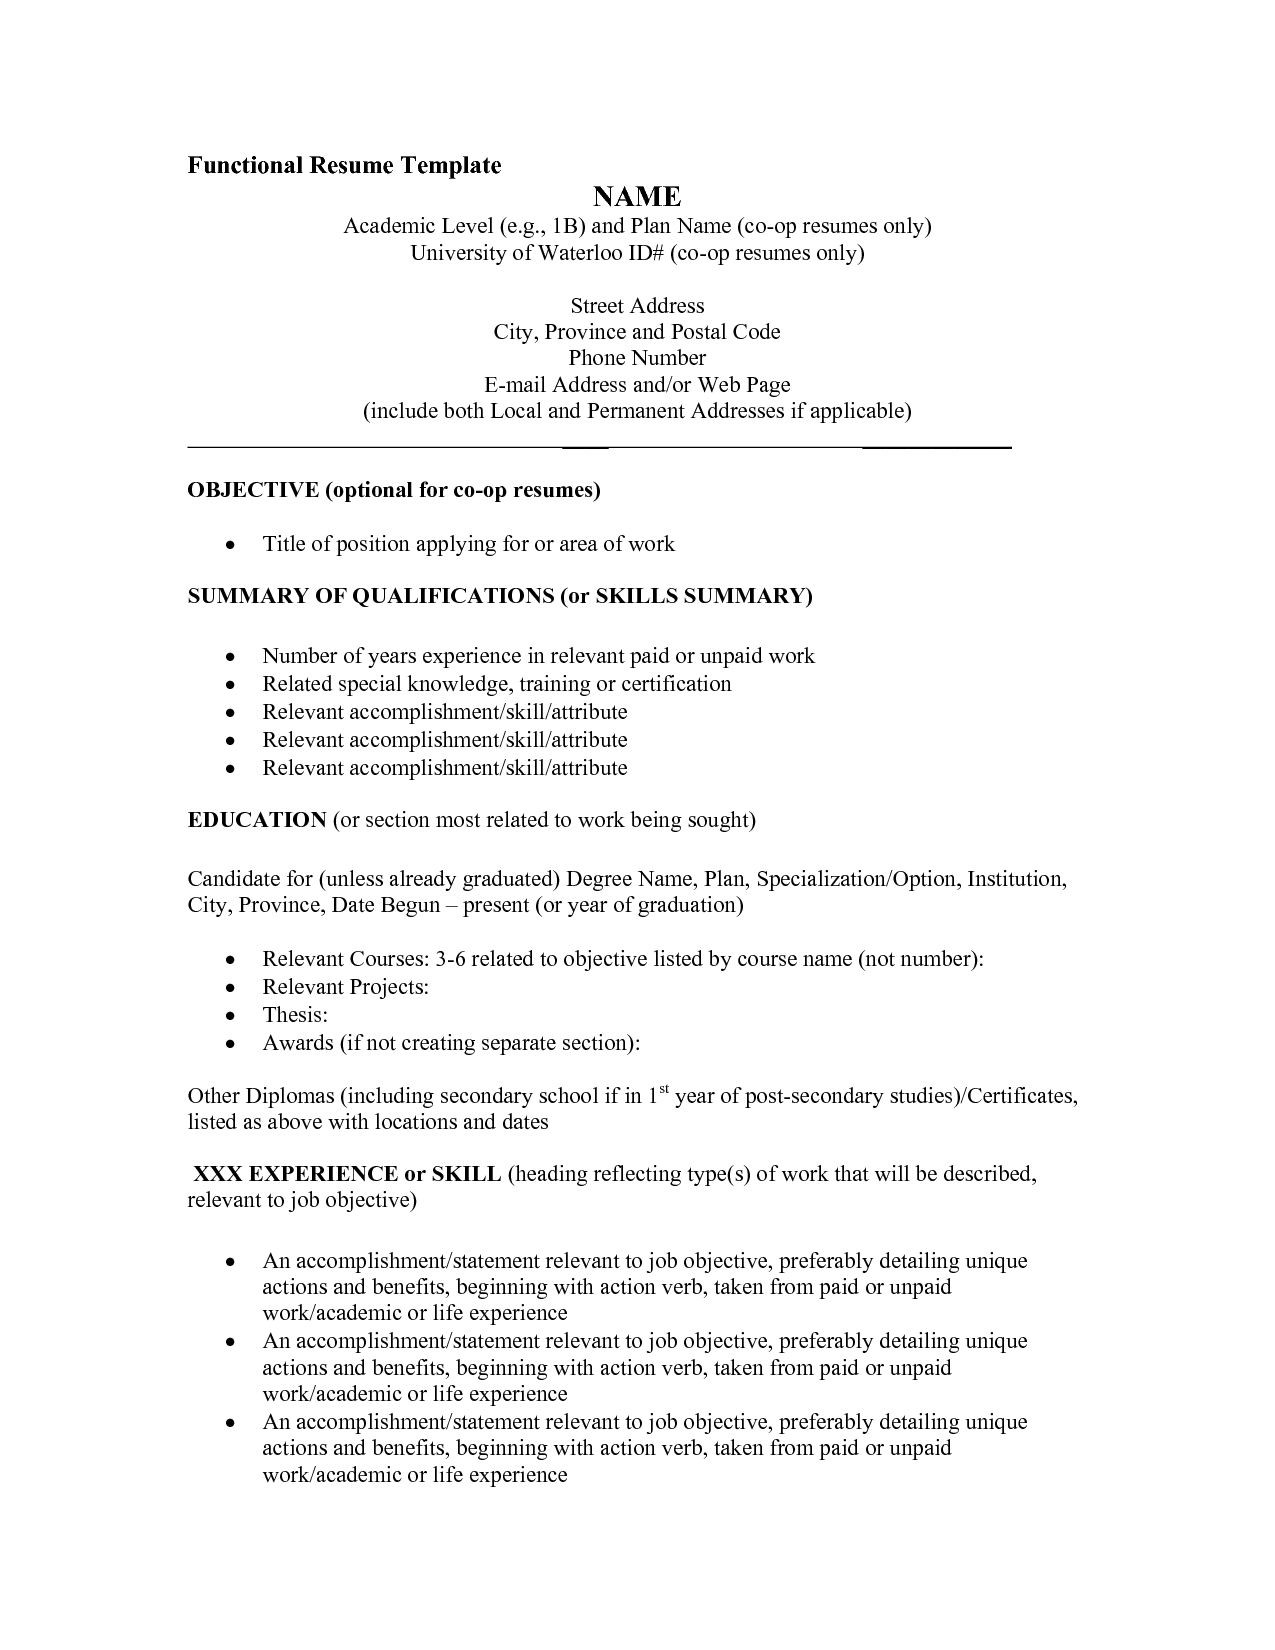 Resume for Dummies On the Job Training Sample Functional Resume Example Pdf Functional Resume Template …